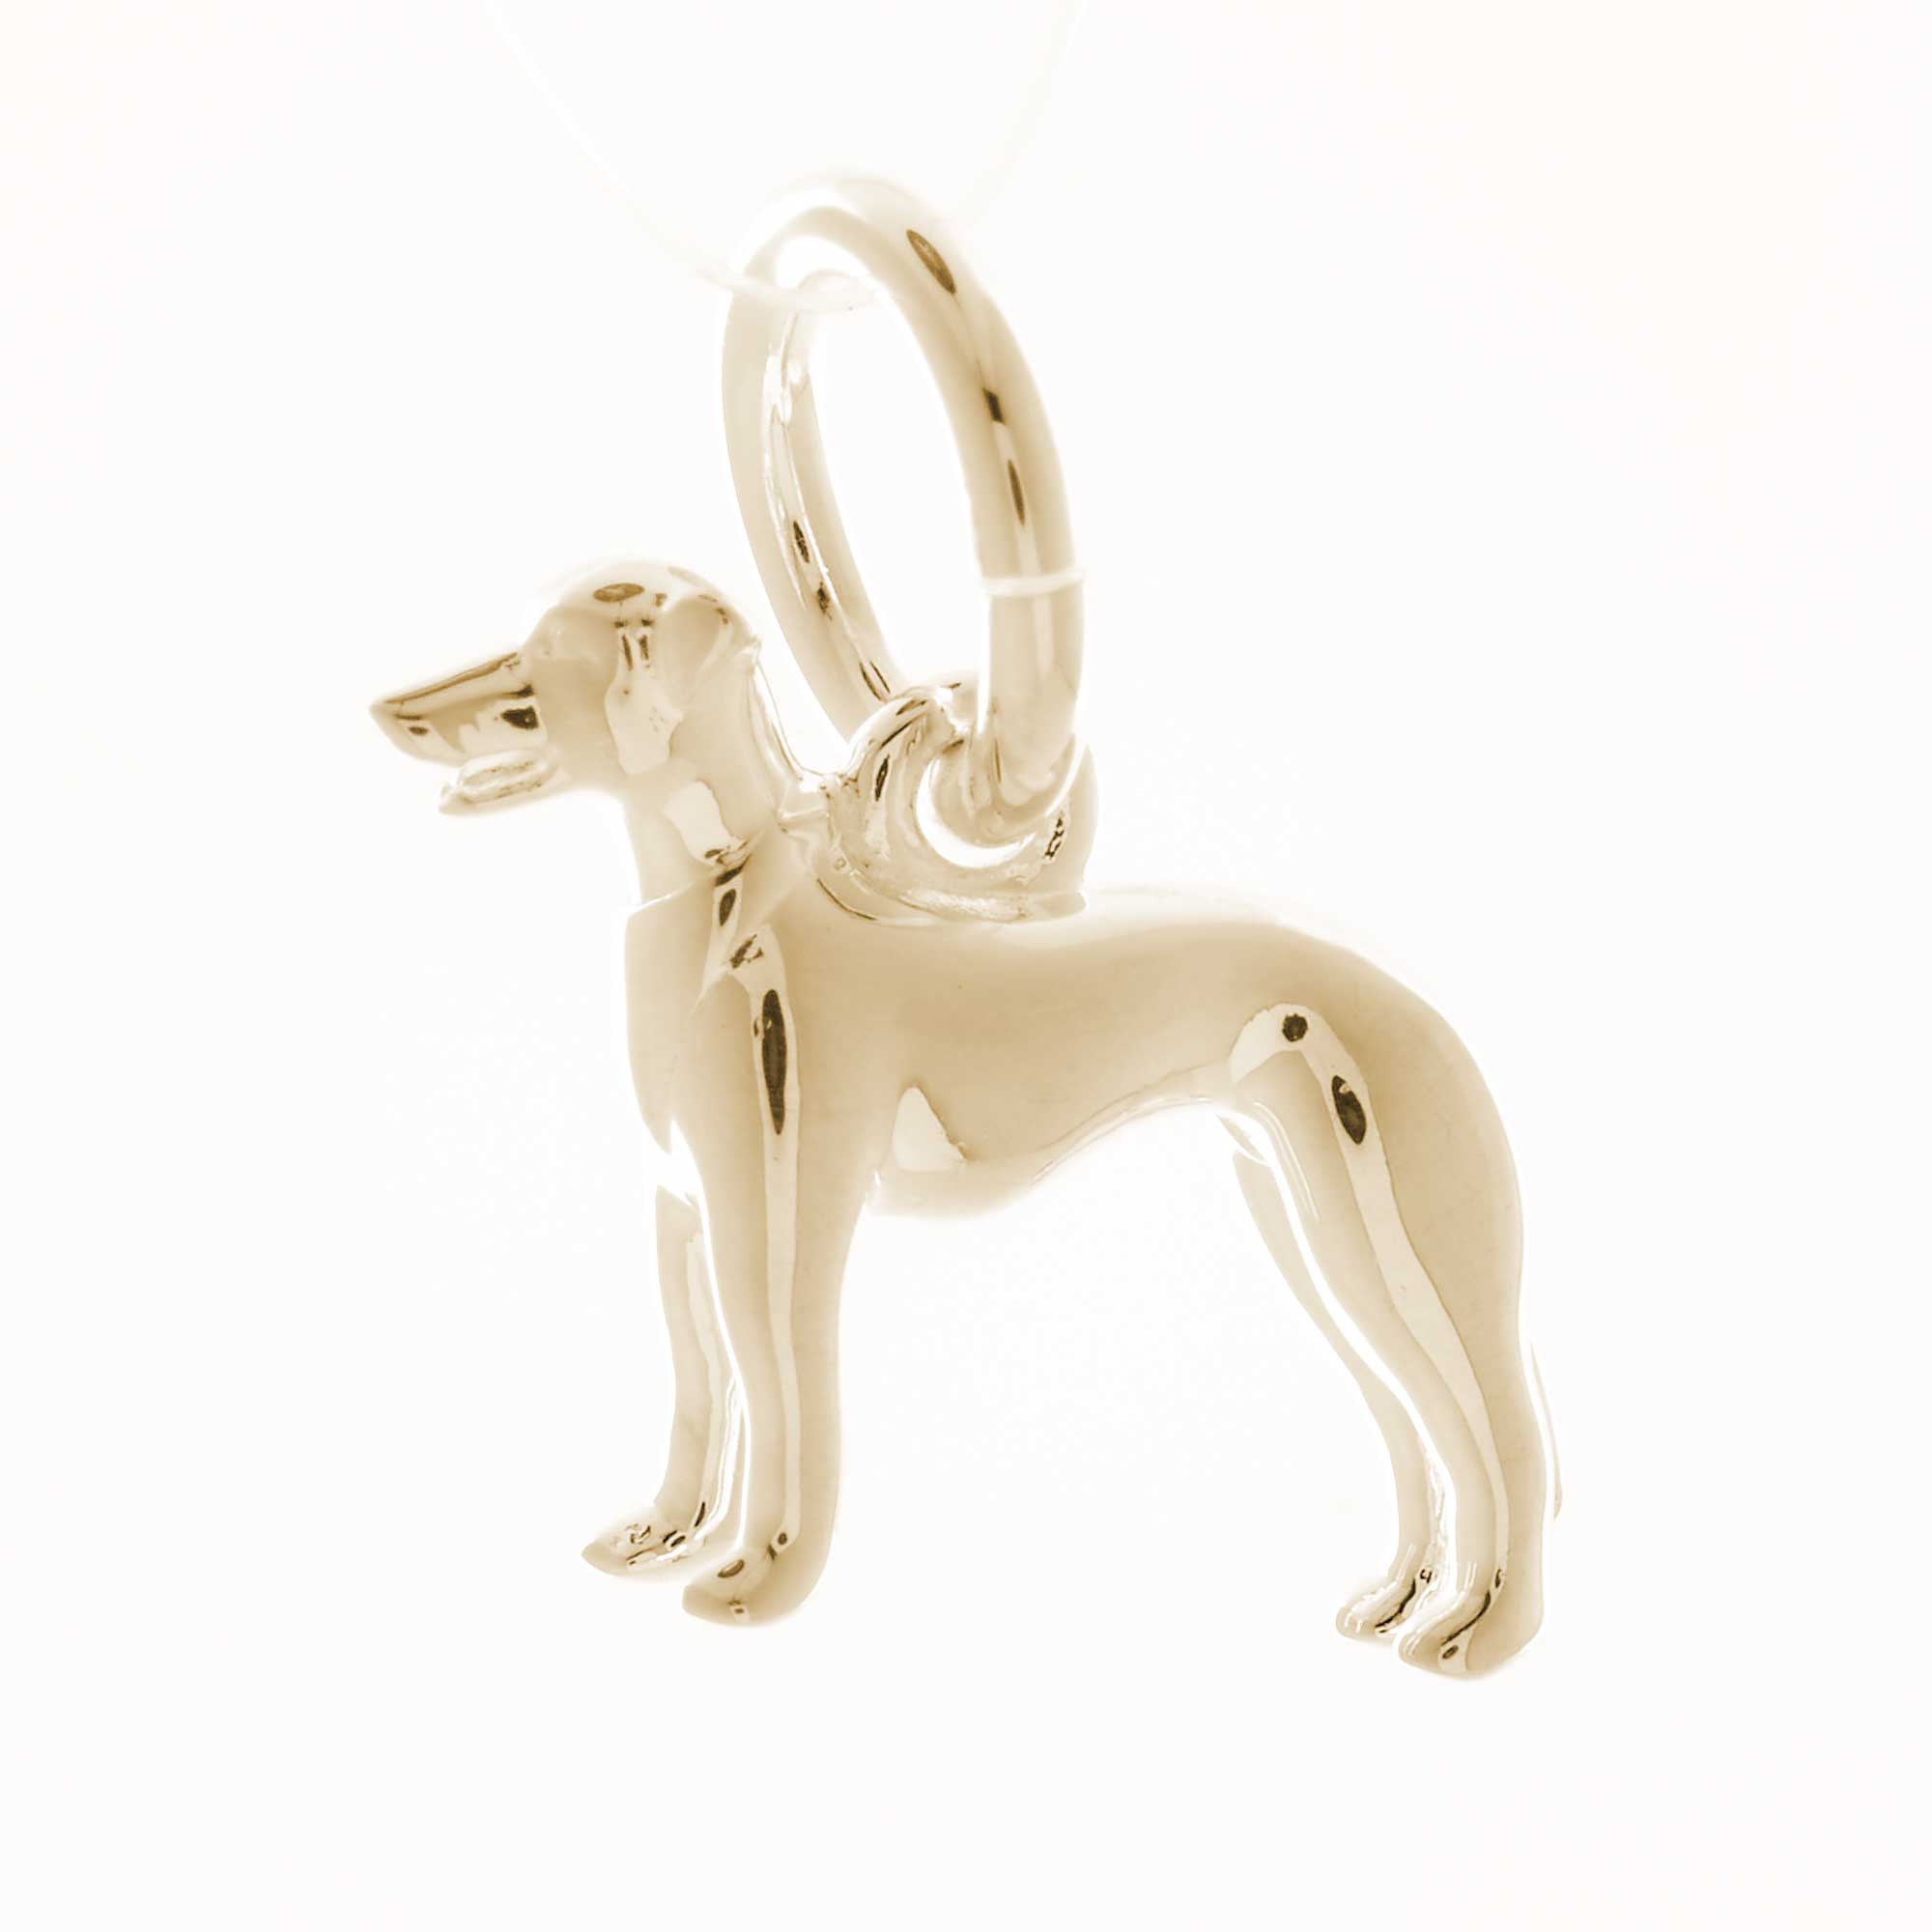 solid 9k 9 carat gold whippet greyhound dog charm scarlett jewellery Brighton UK